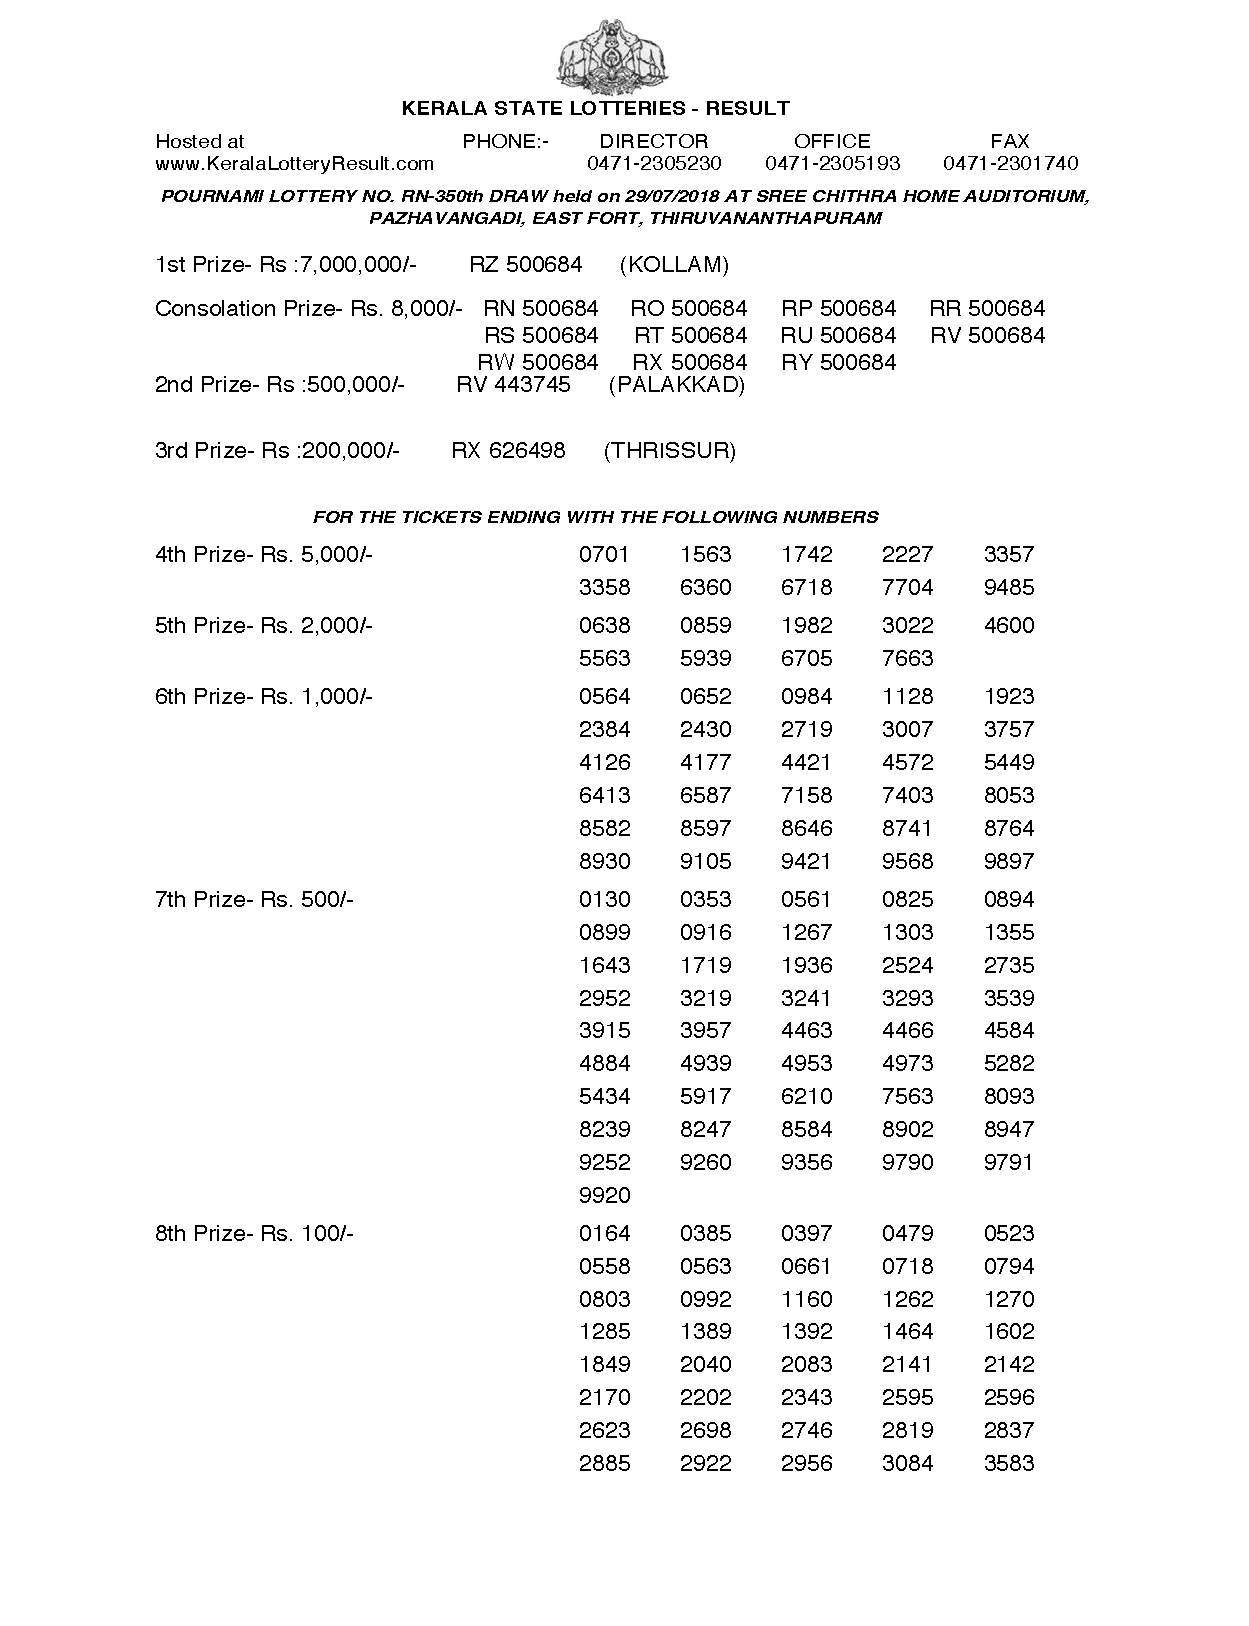 Pournami RN350 Kerala Lottery Results Screenshot: Page 1